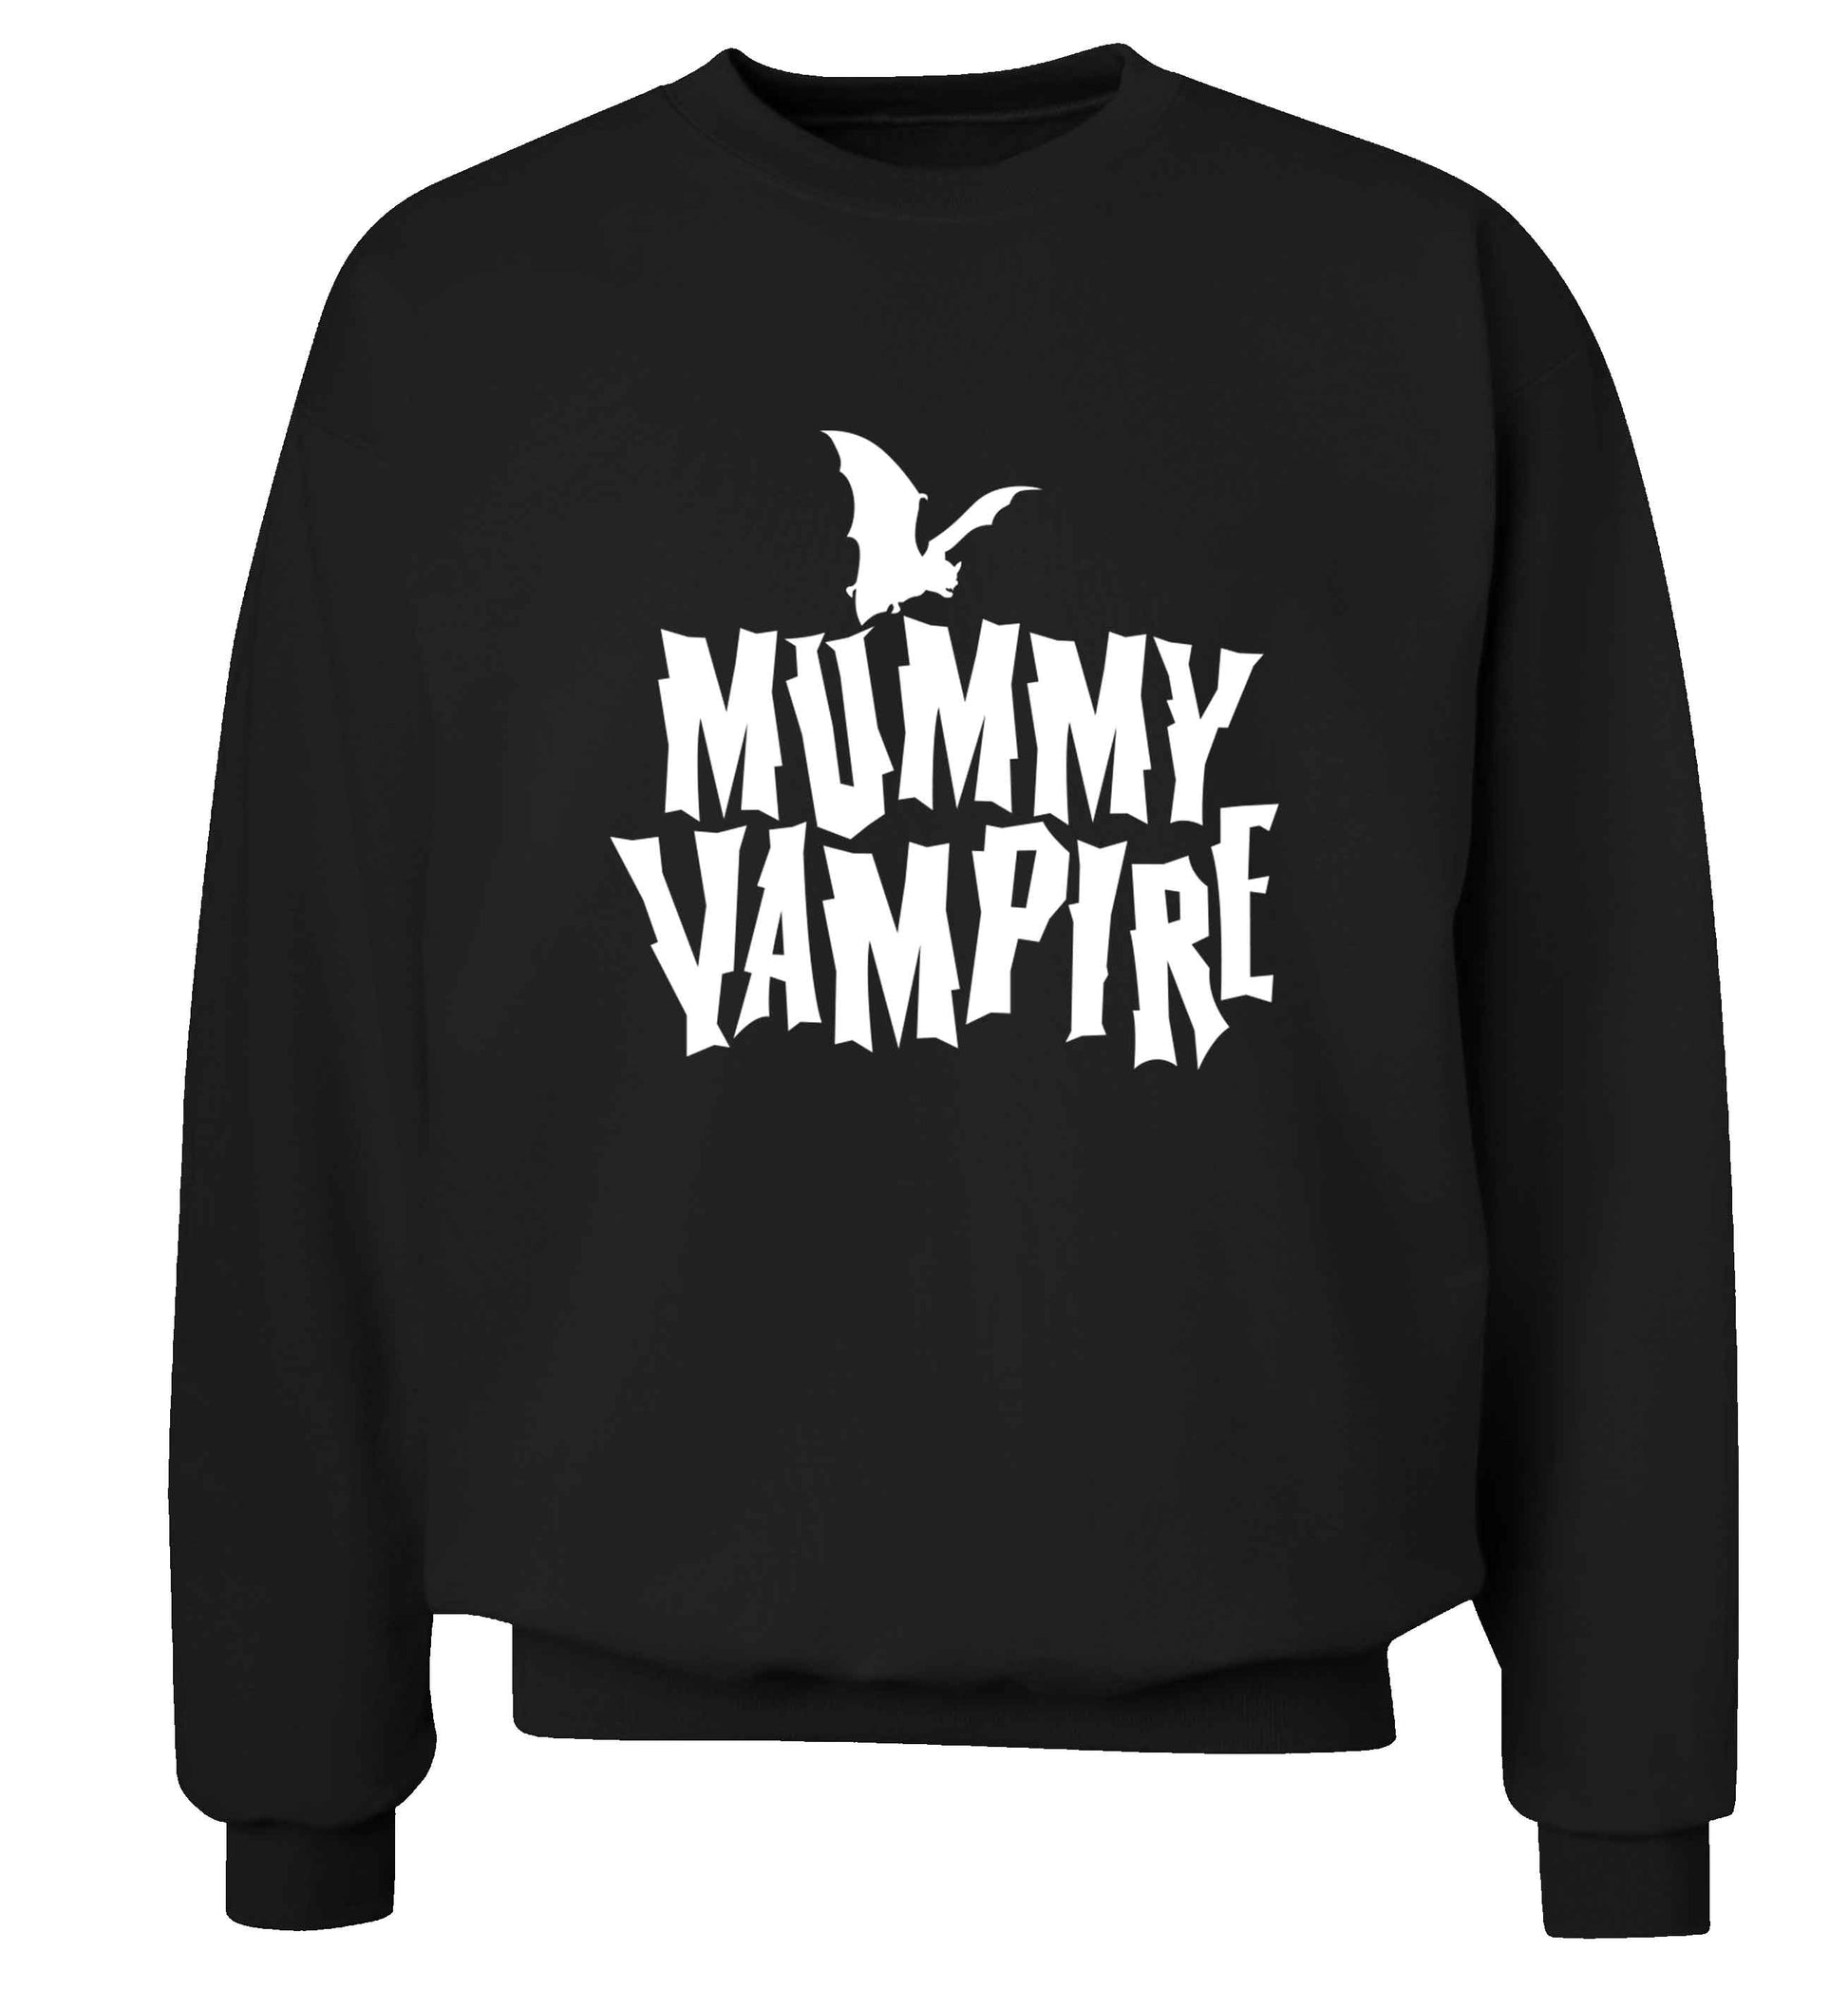 Mummy vampire adult's unisex black sweater 2XL